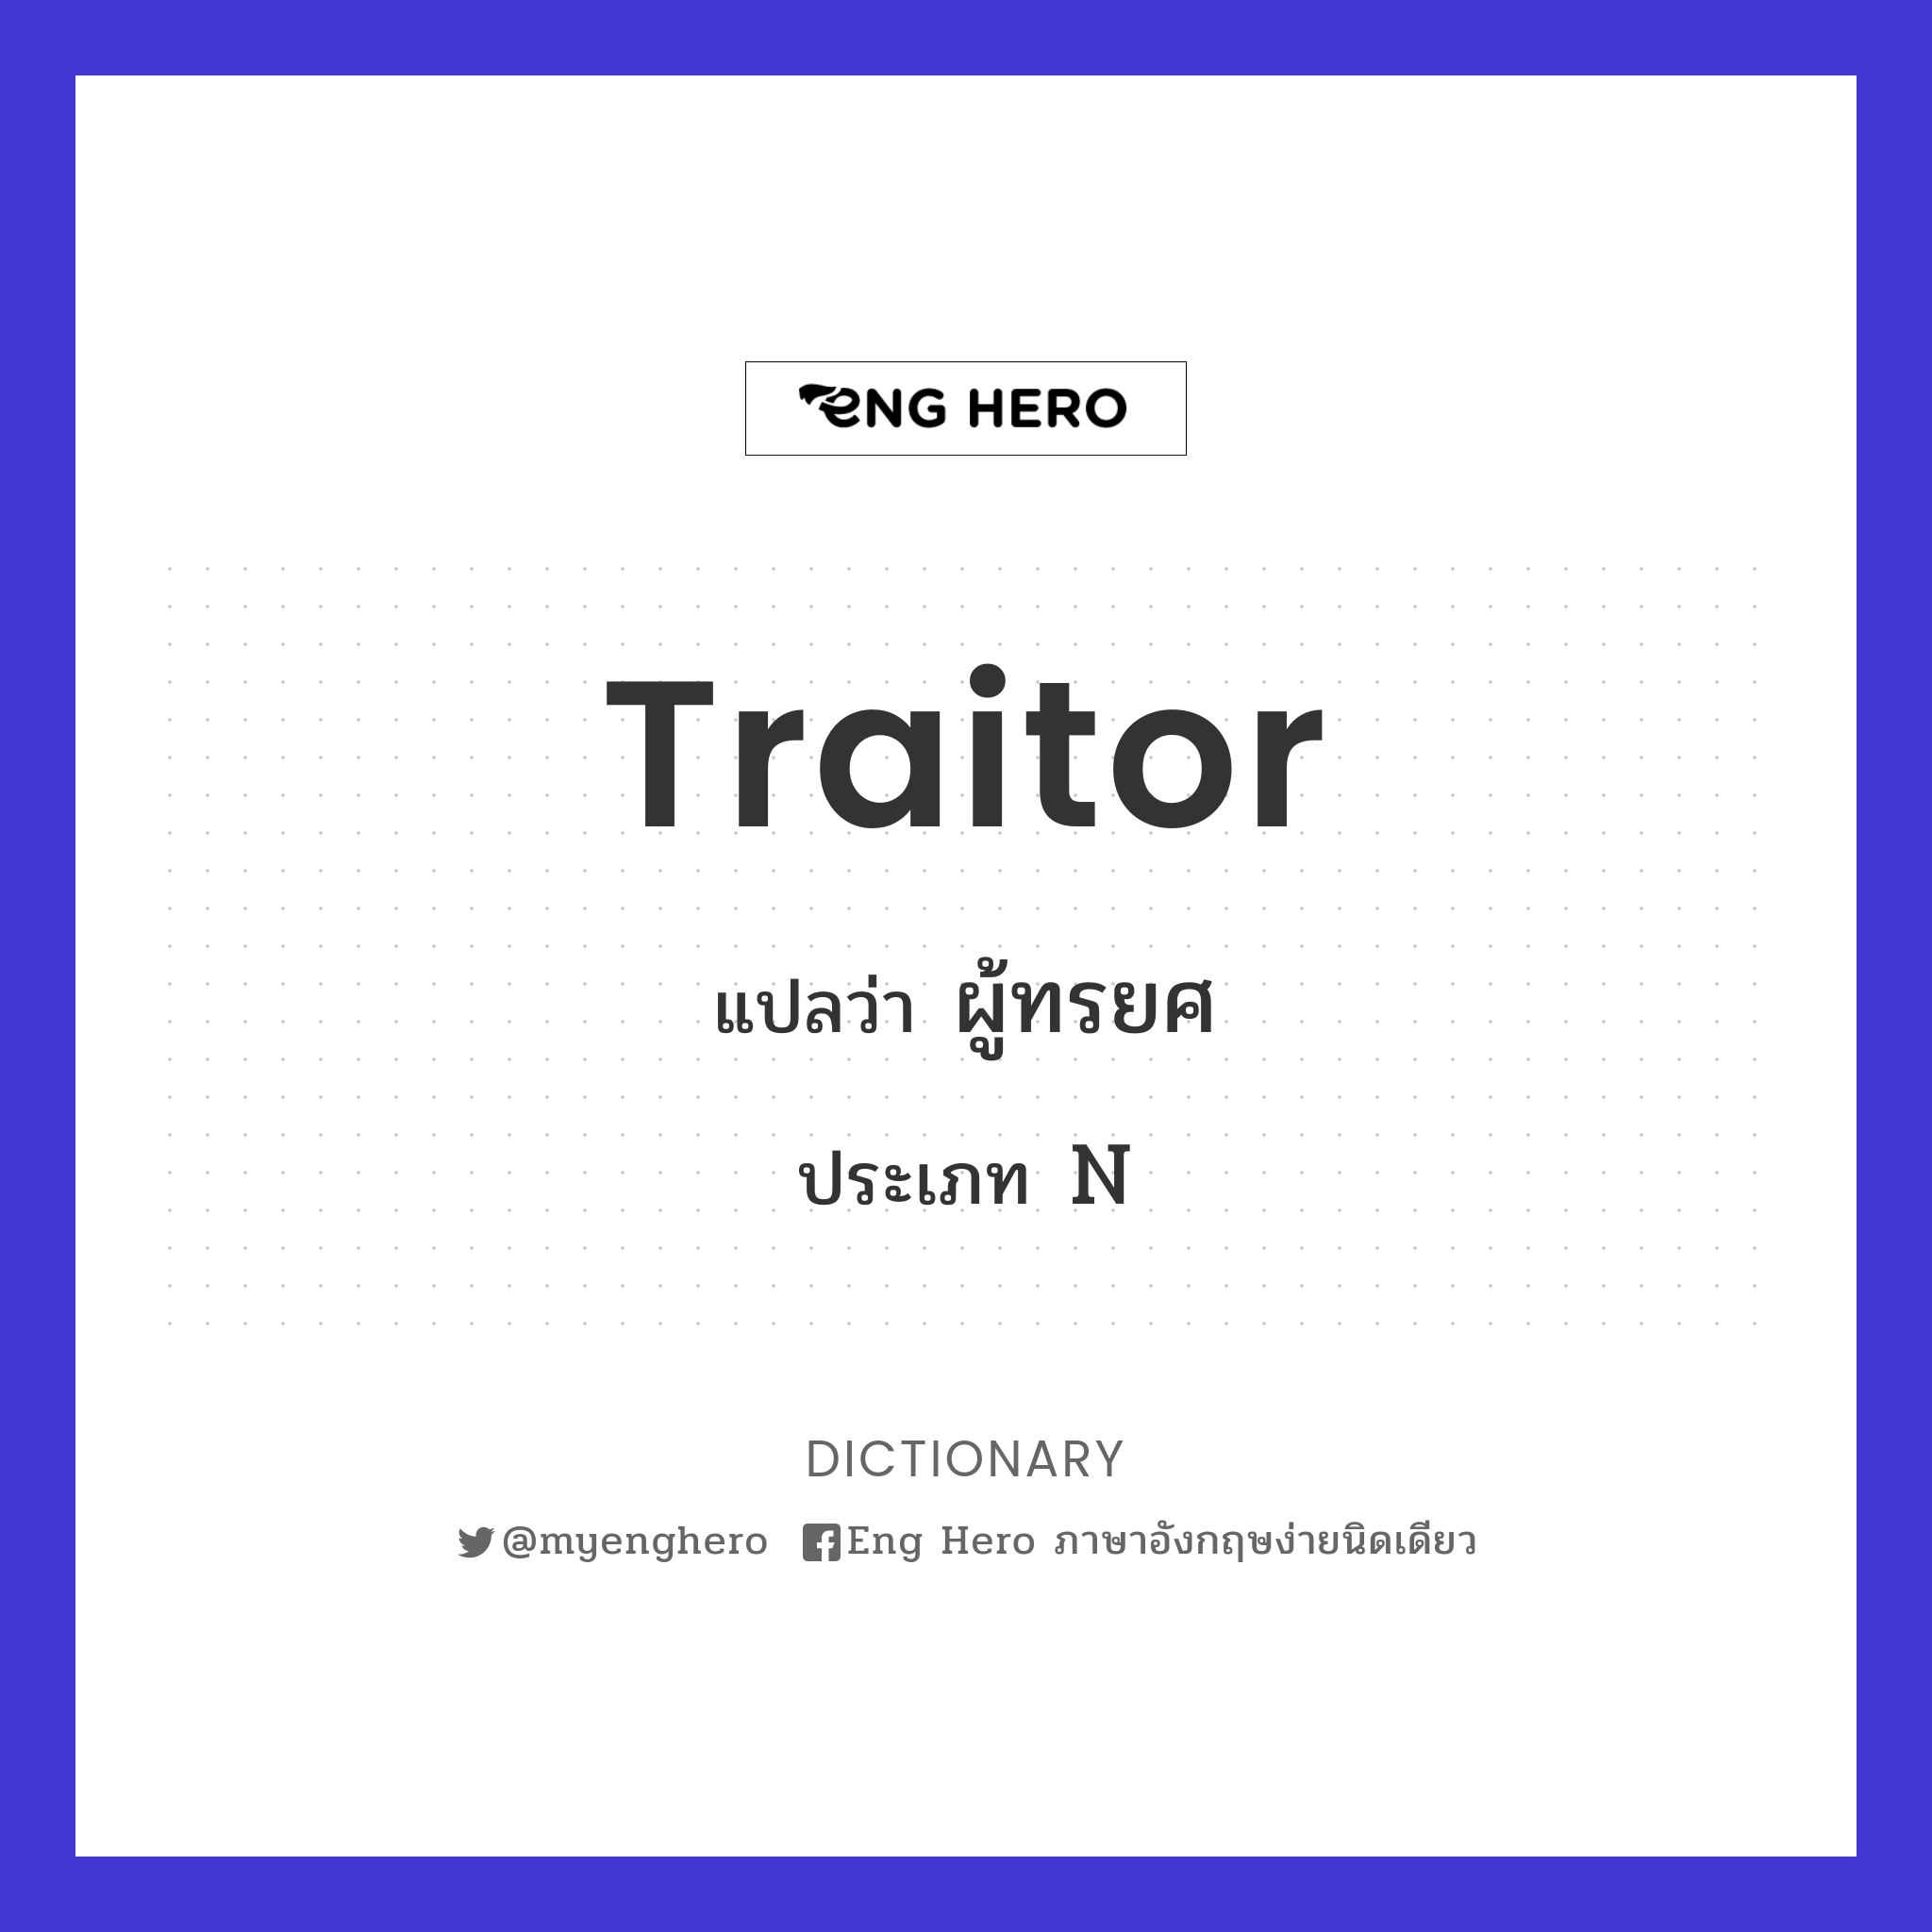 traitor